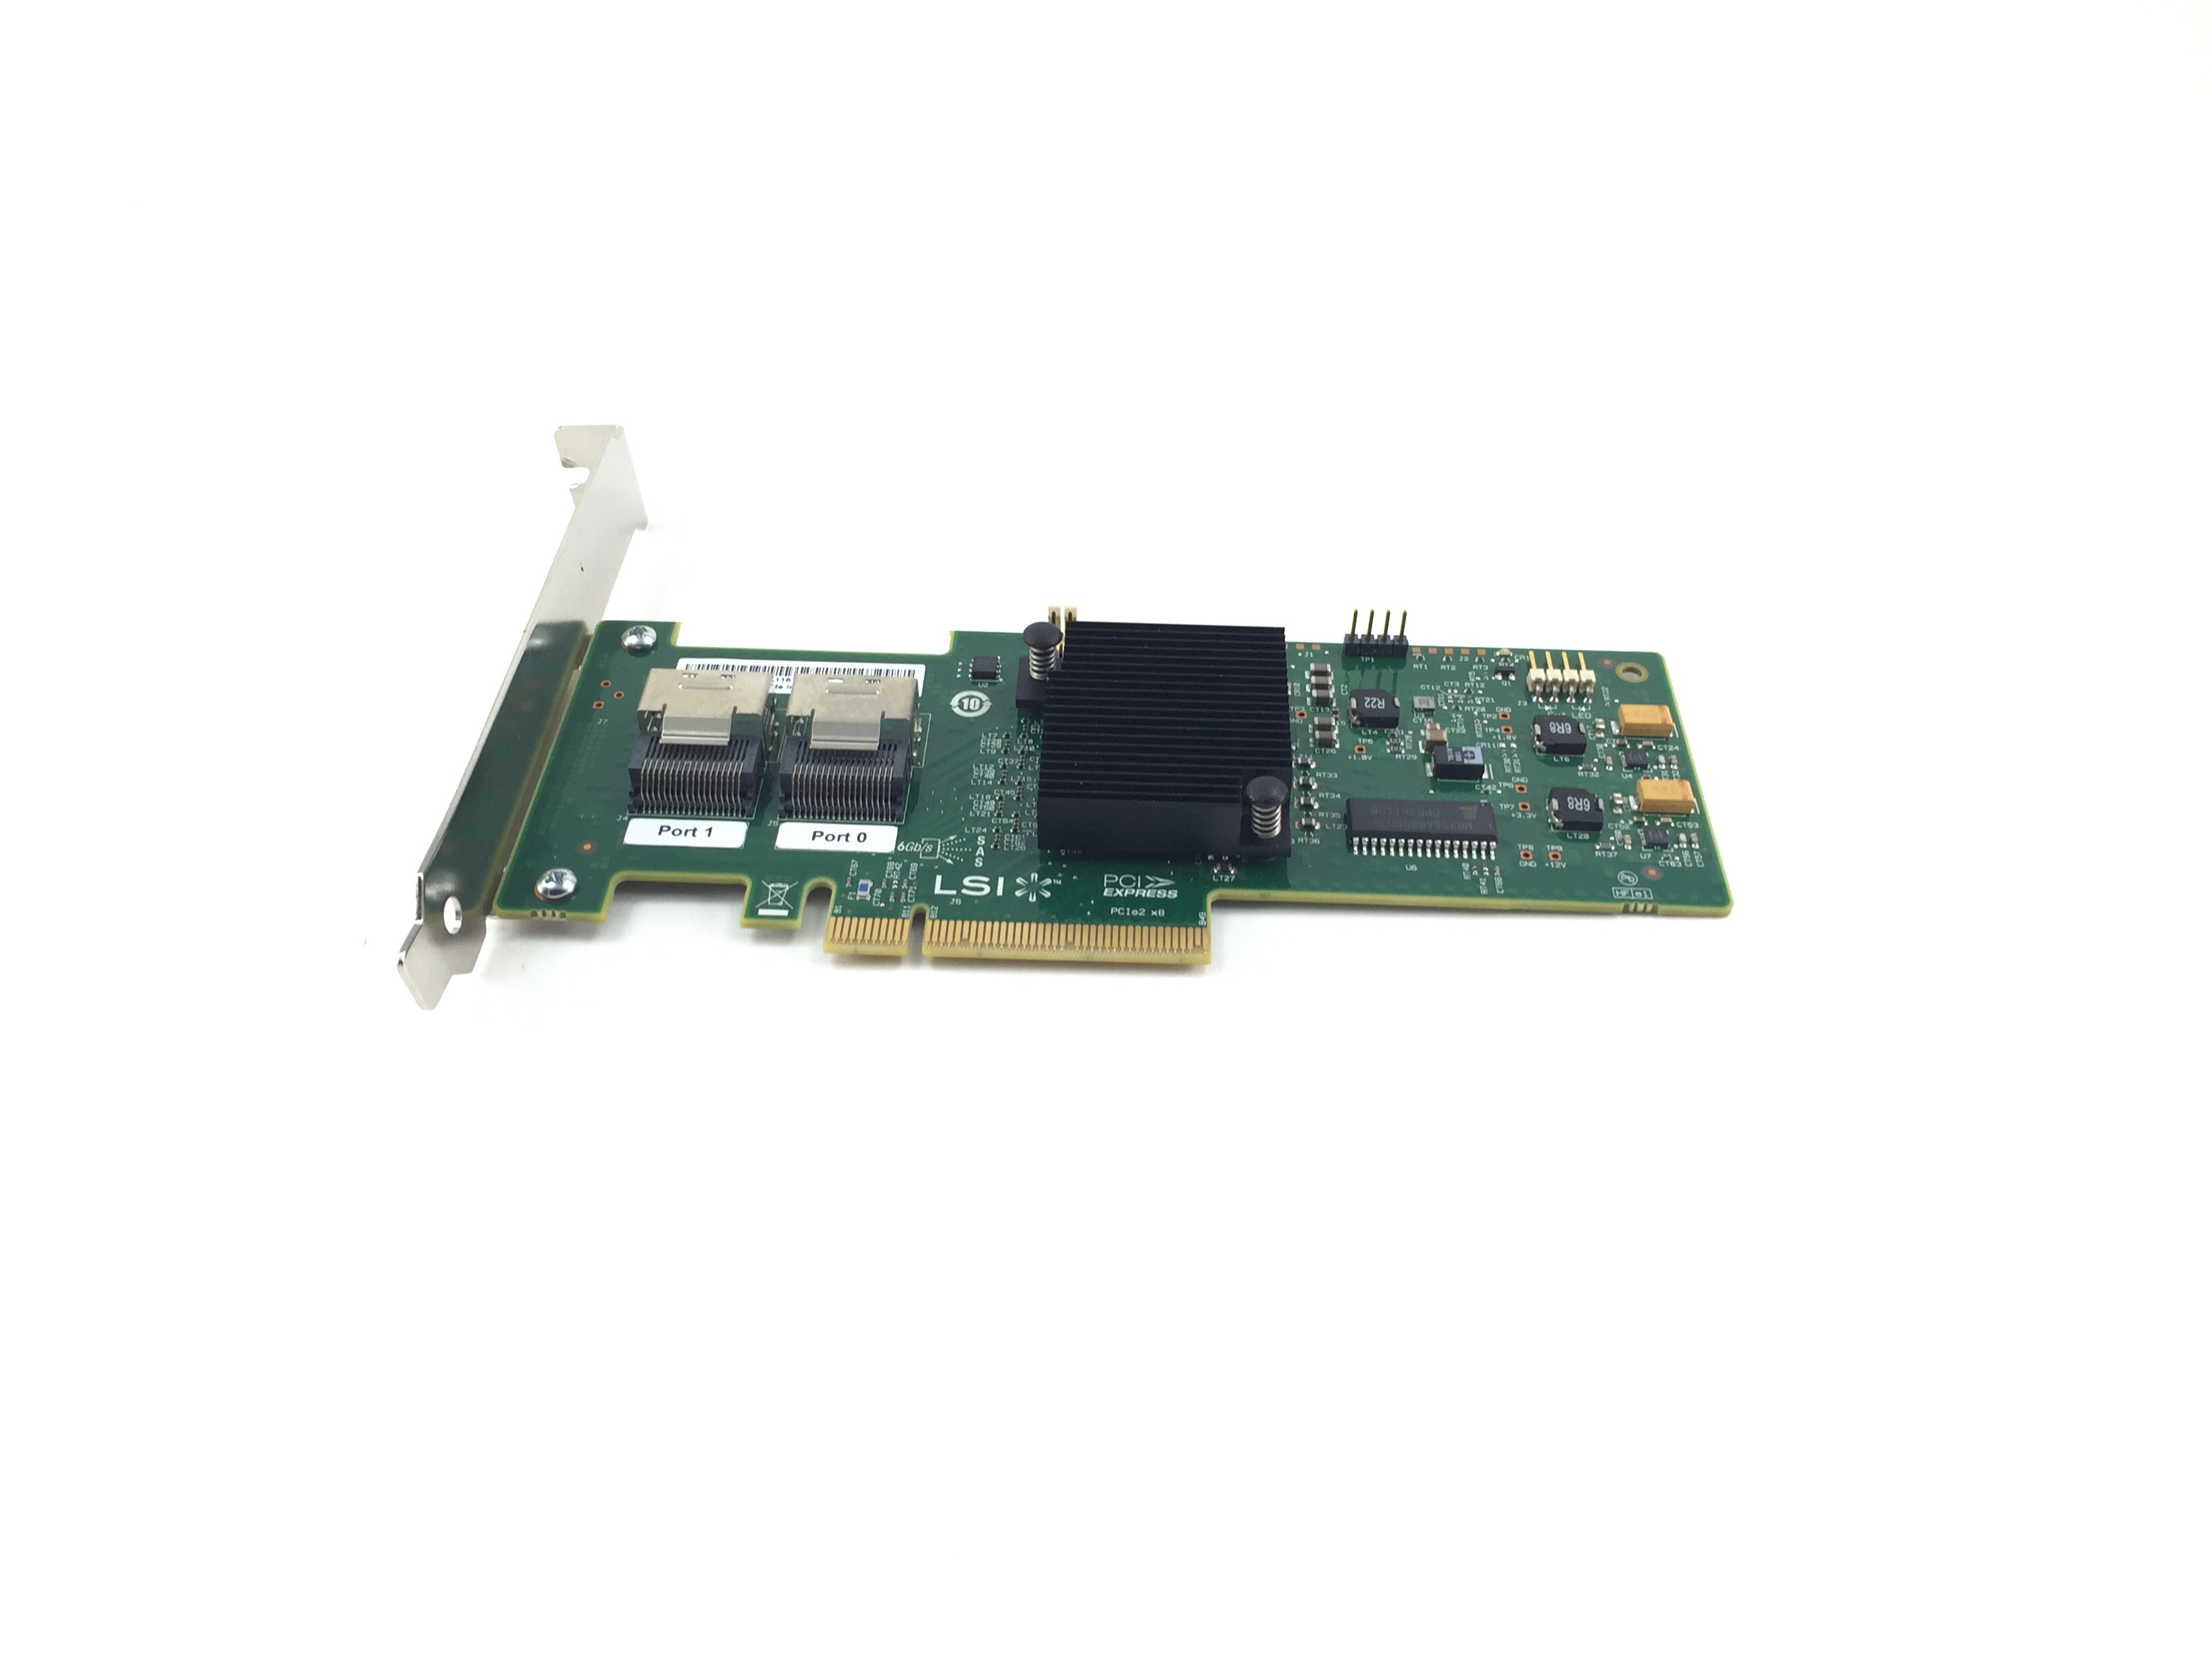 IBM LSI SERVERAID M1015 SAS9220-8I PCI-E RAID CONTROLLER (46M0861)